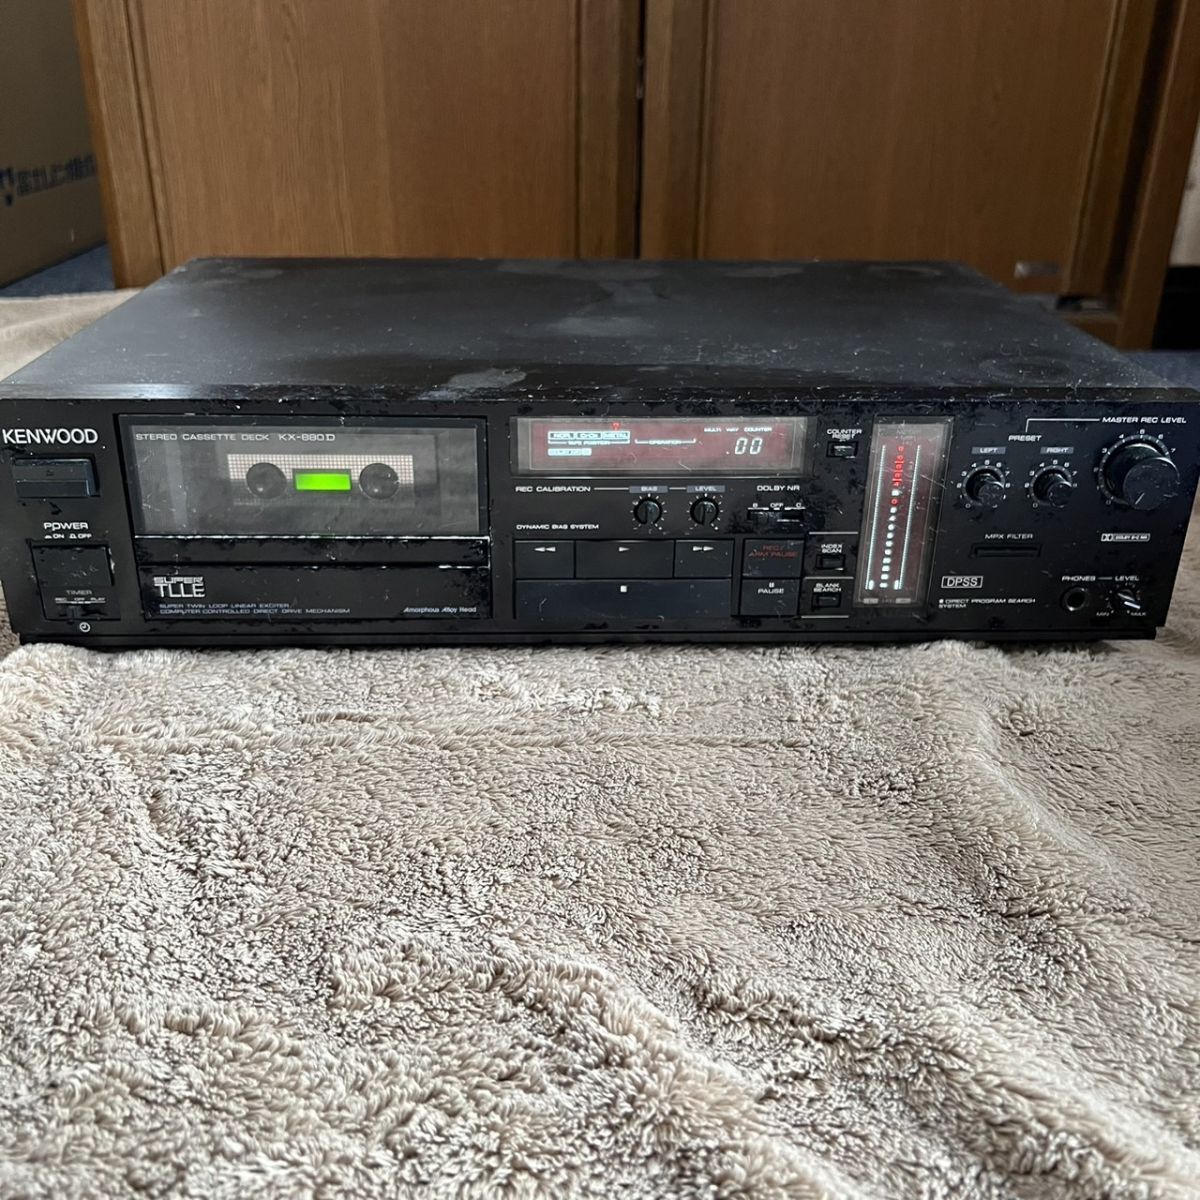  rare KENWOOD Kenwood KX-880D stereo cassette deck audio 2 head single sound equipment electrification OK